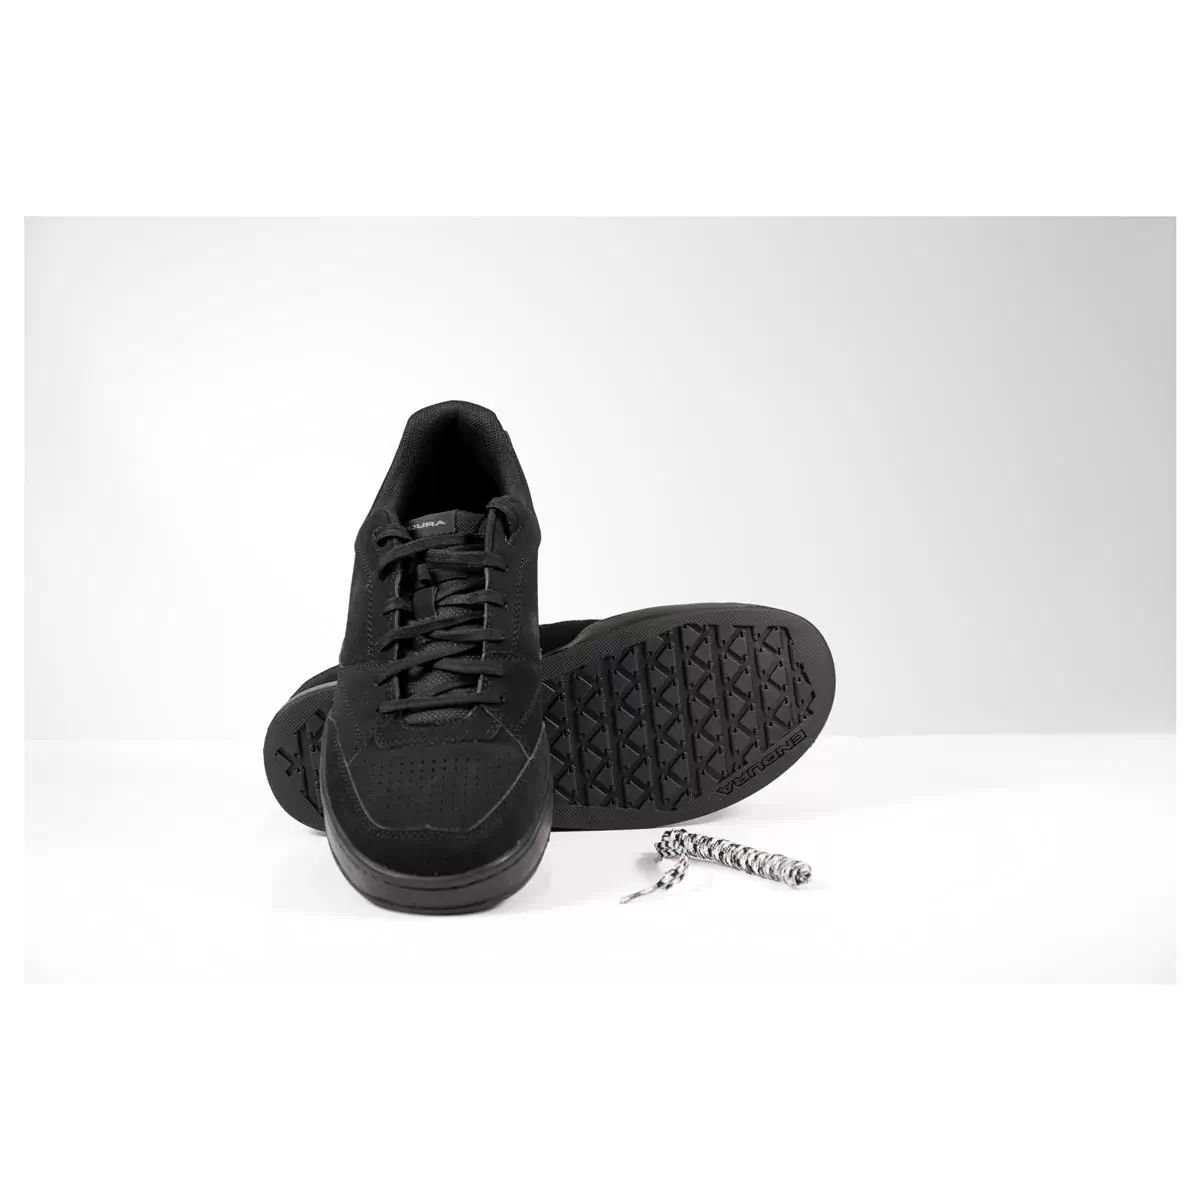 Hummvee Flat Pedal Shoes Black Size 45,5 #3